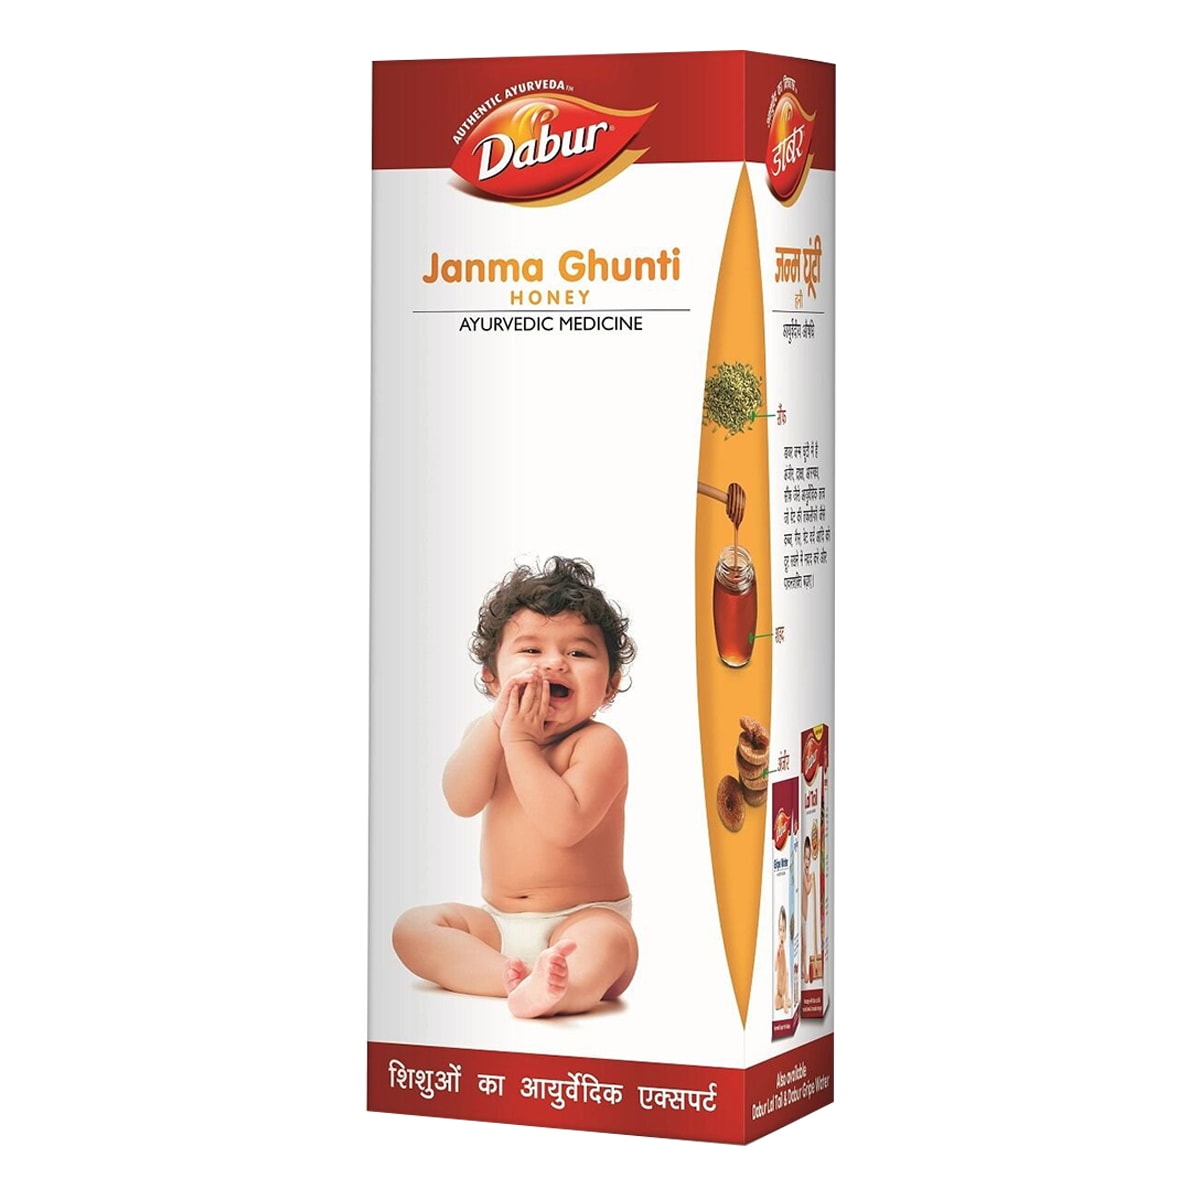 Buy Dabur Janma Ghunti Honey for Kids (Ayurvedic Medicine) - 60 ml